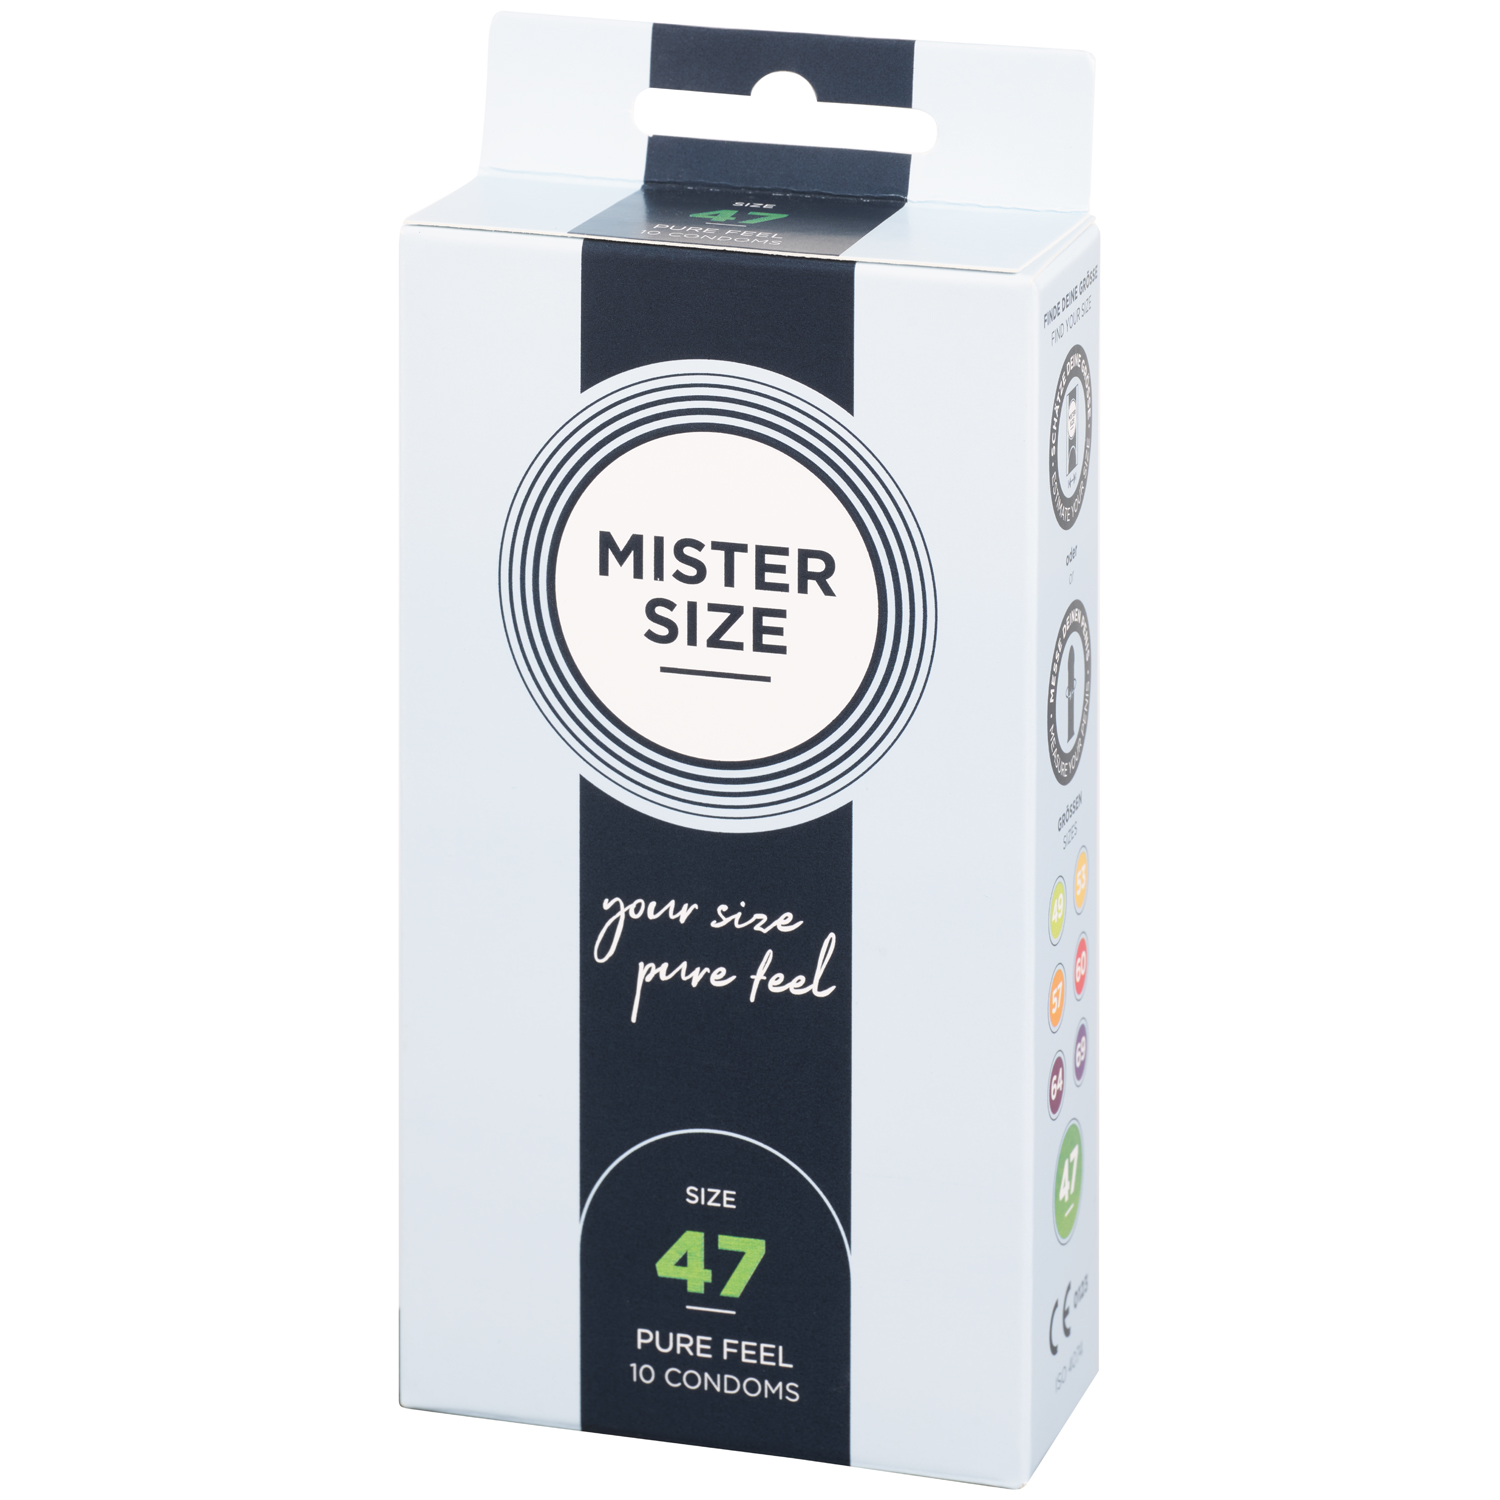 Mister Size Pure Feel Kondomer 10 stk     - Klar - 47mm thumbnail